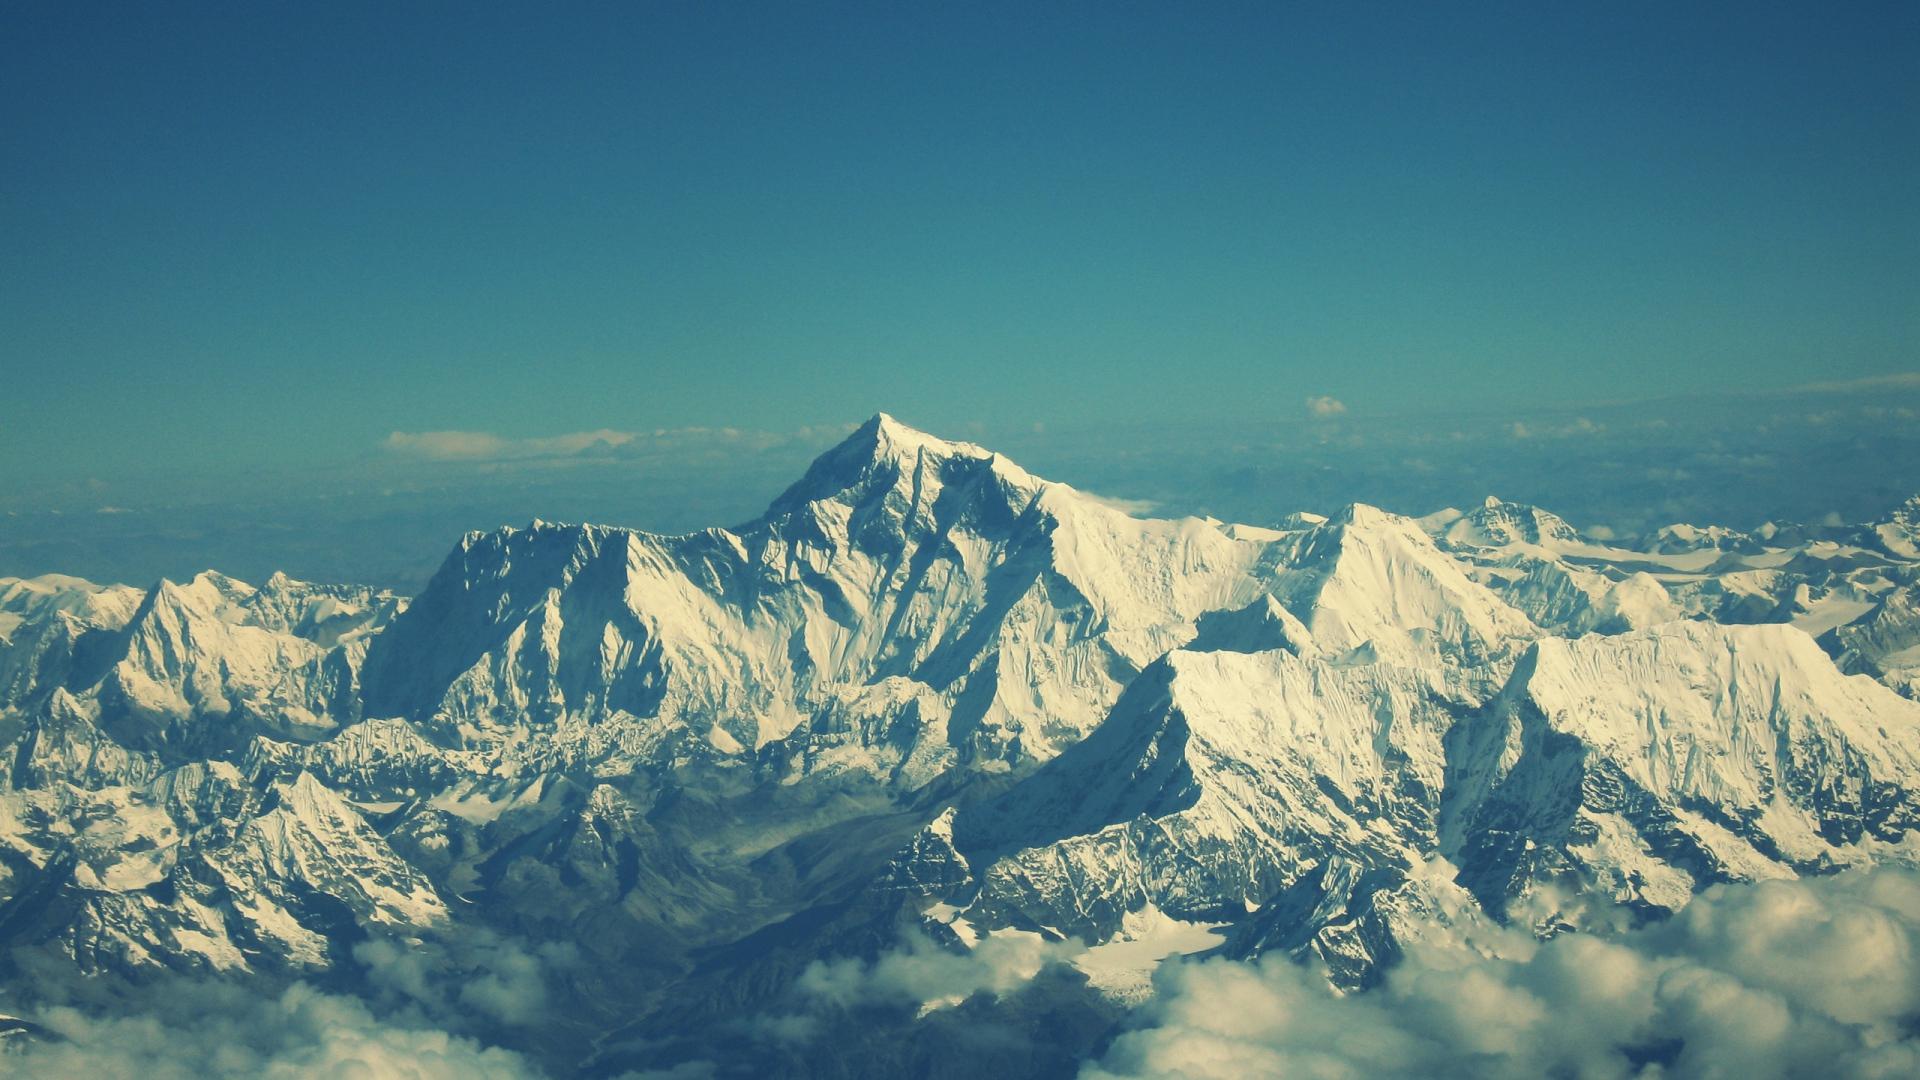 Mount Everest [1920x1080]